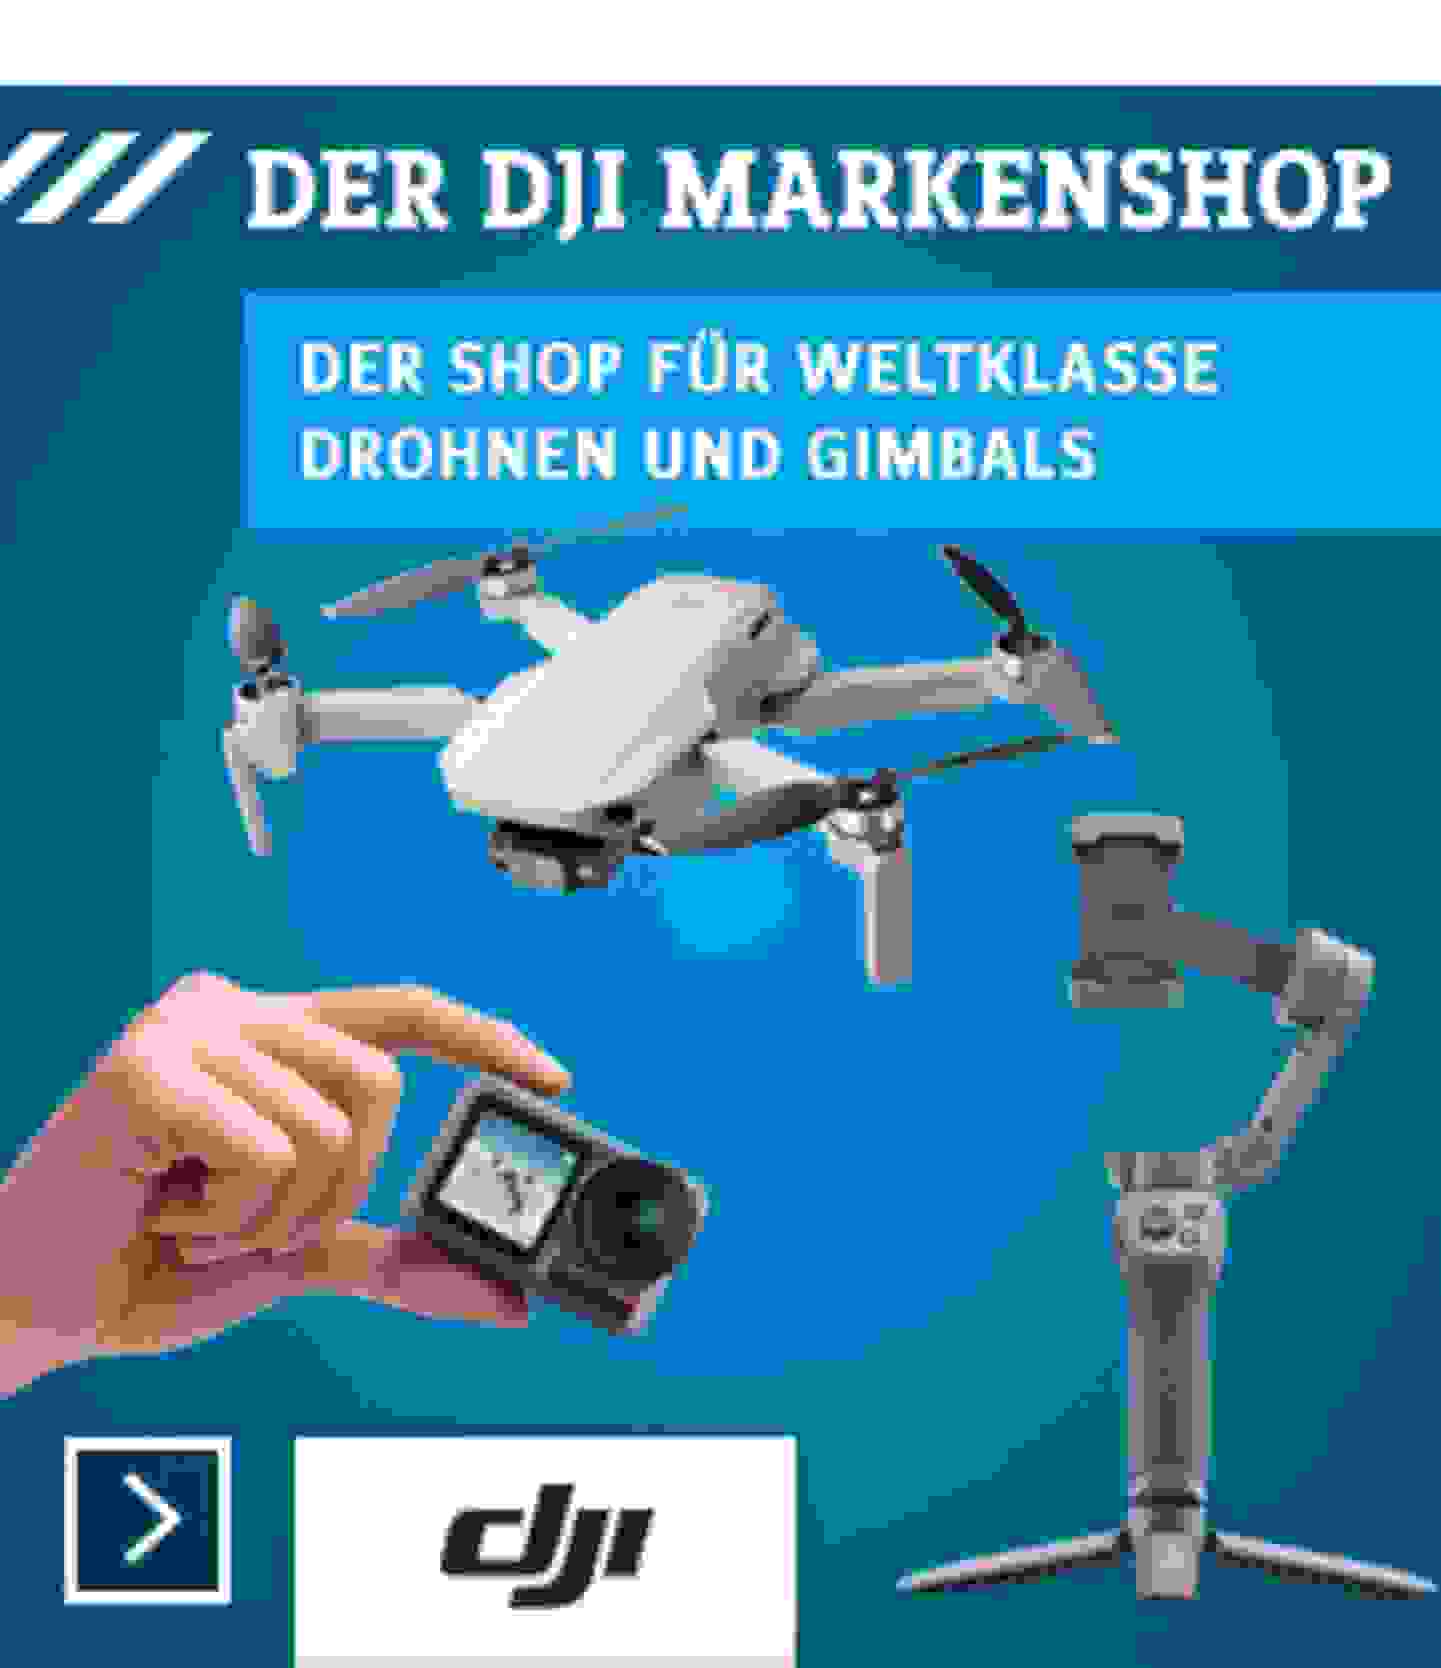 DJI Markenshop